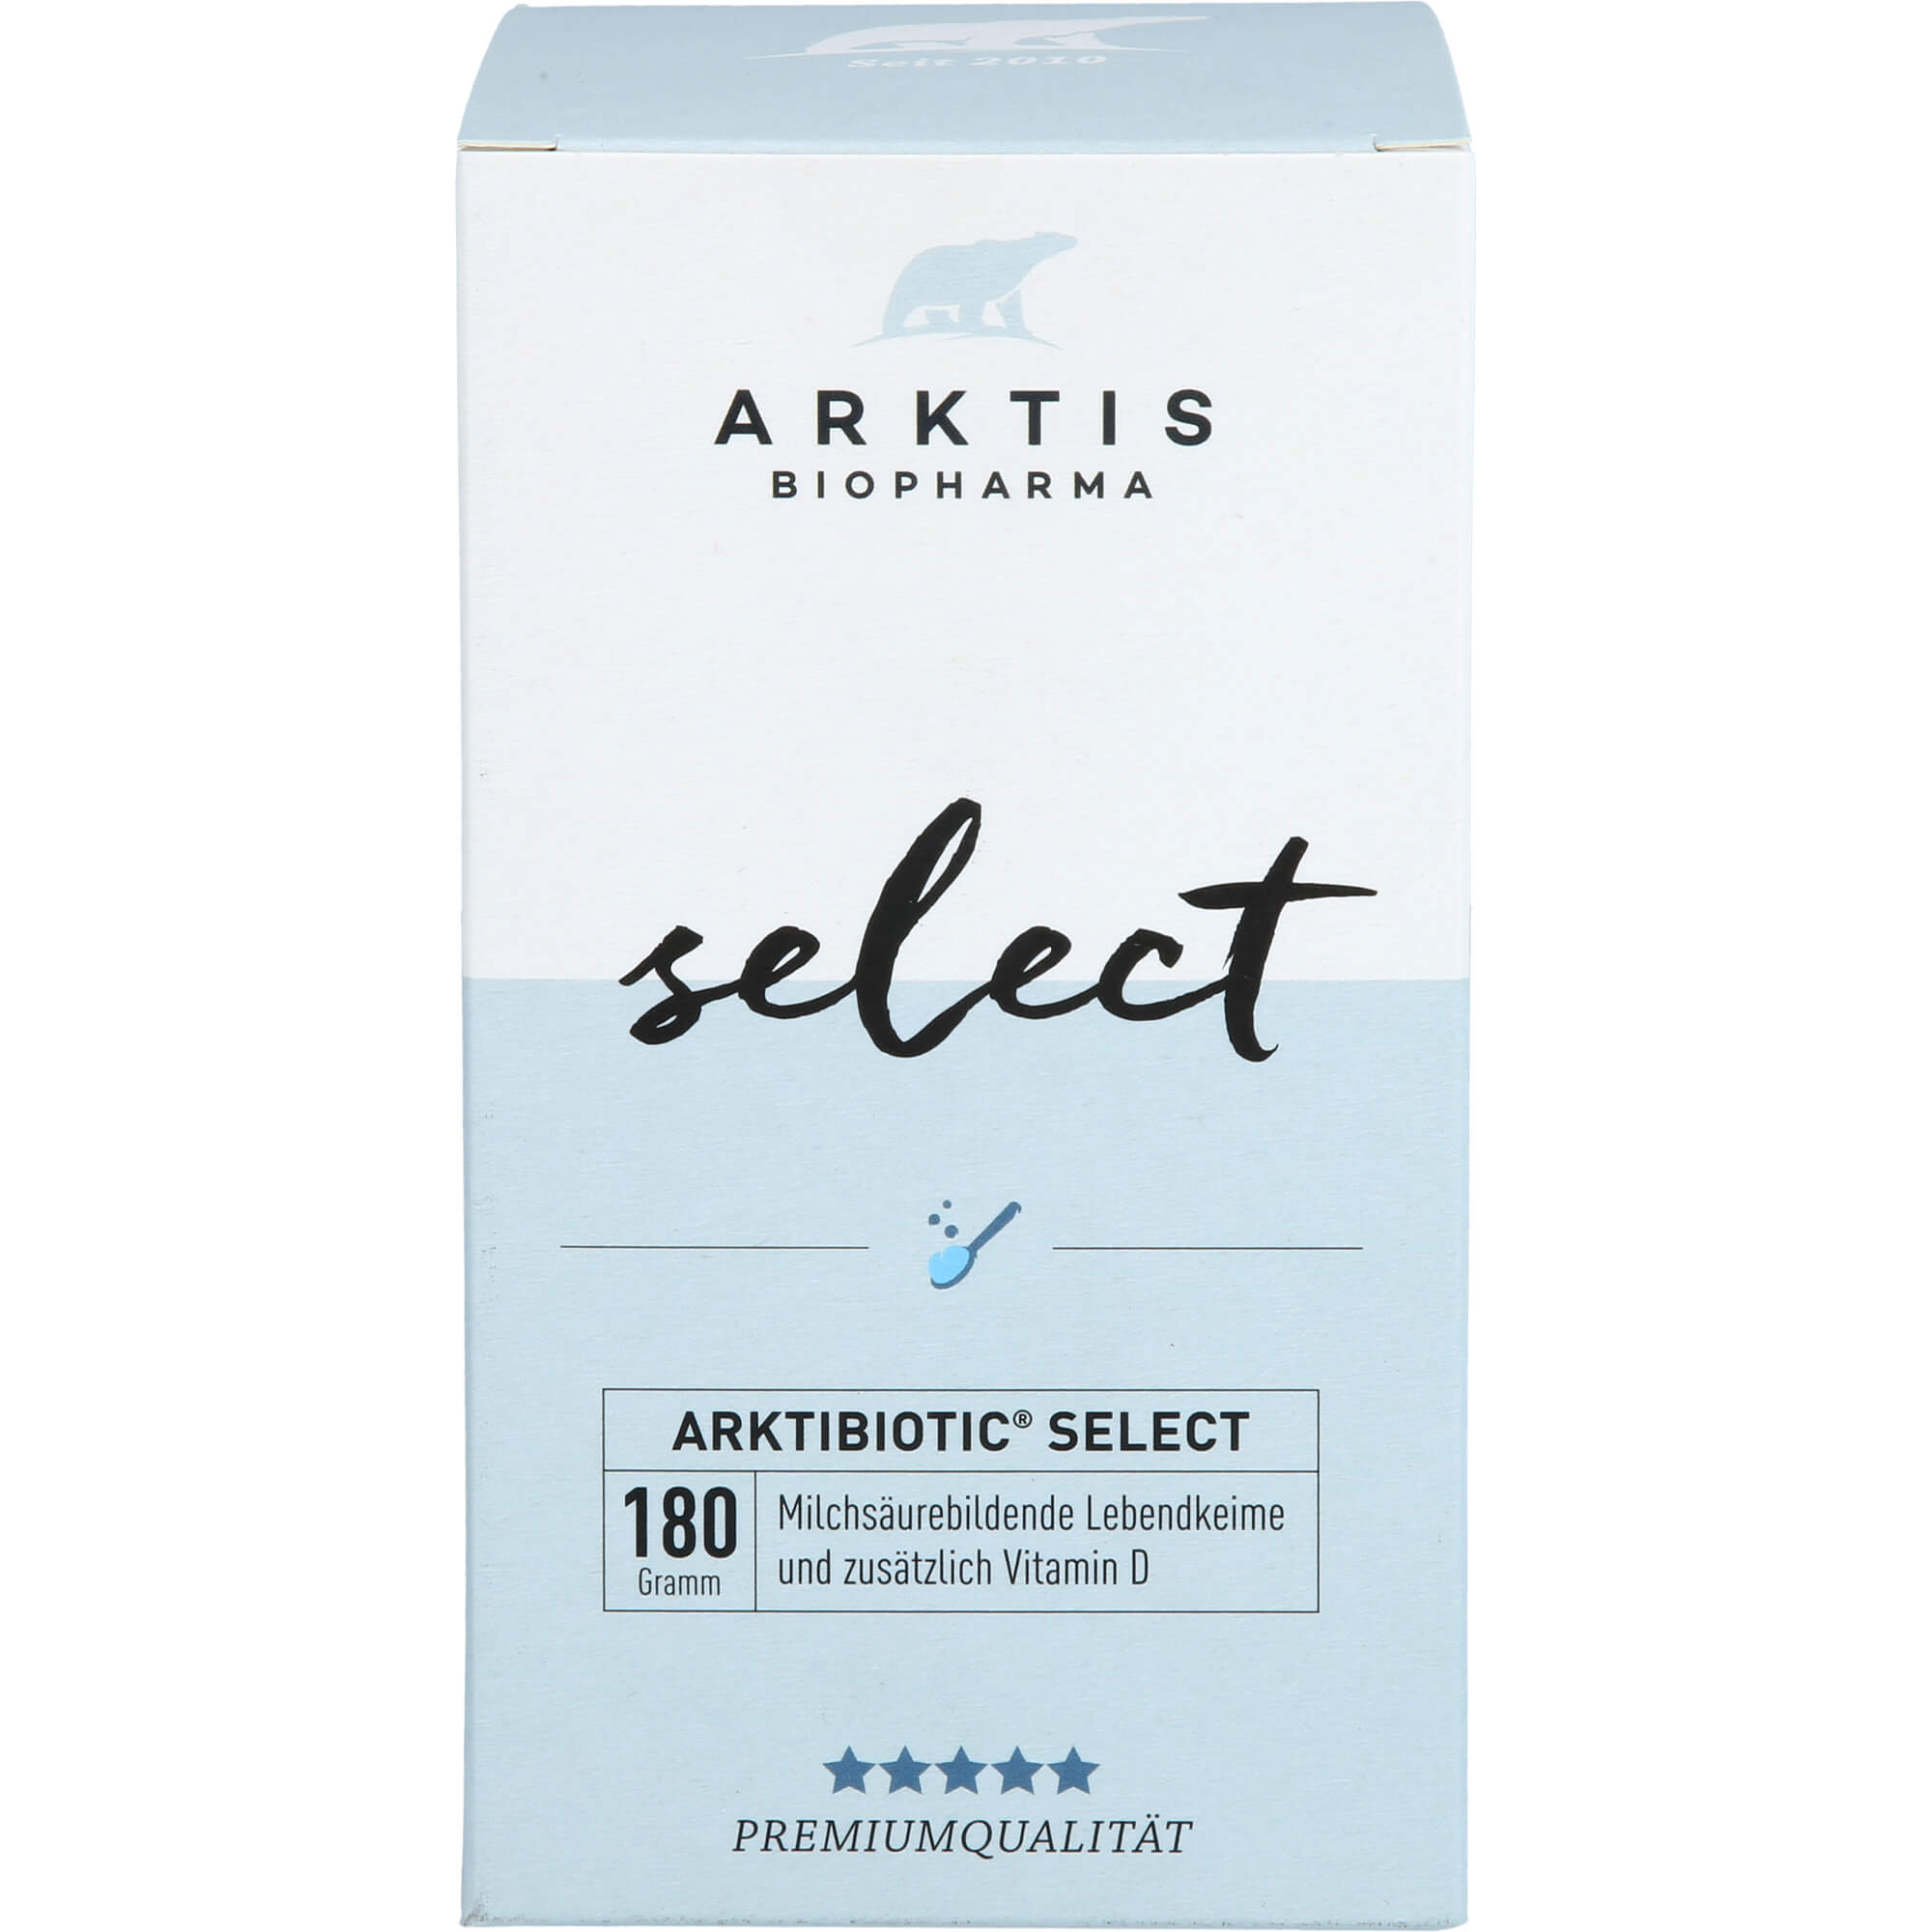 ARKTIS Arktibiotic select Pulver